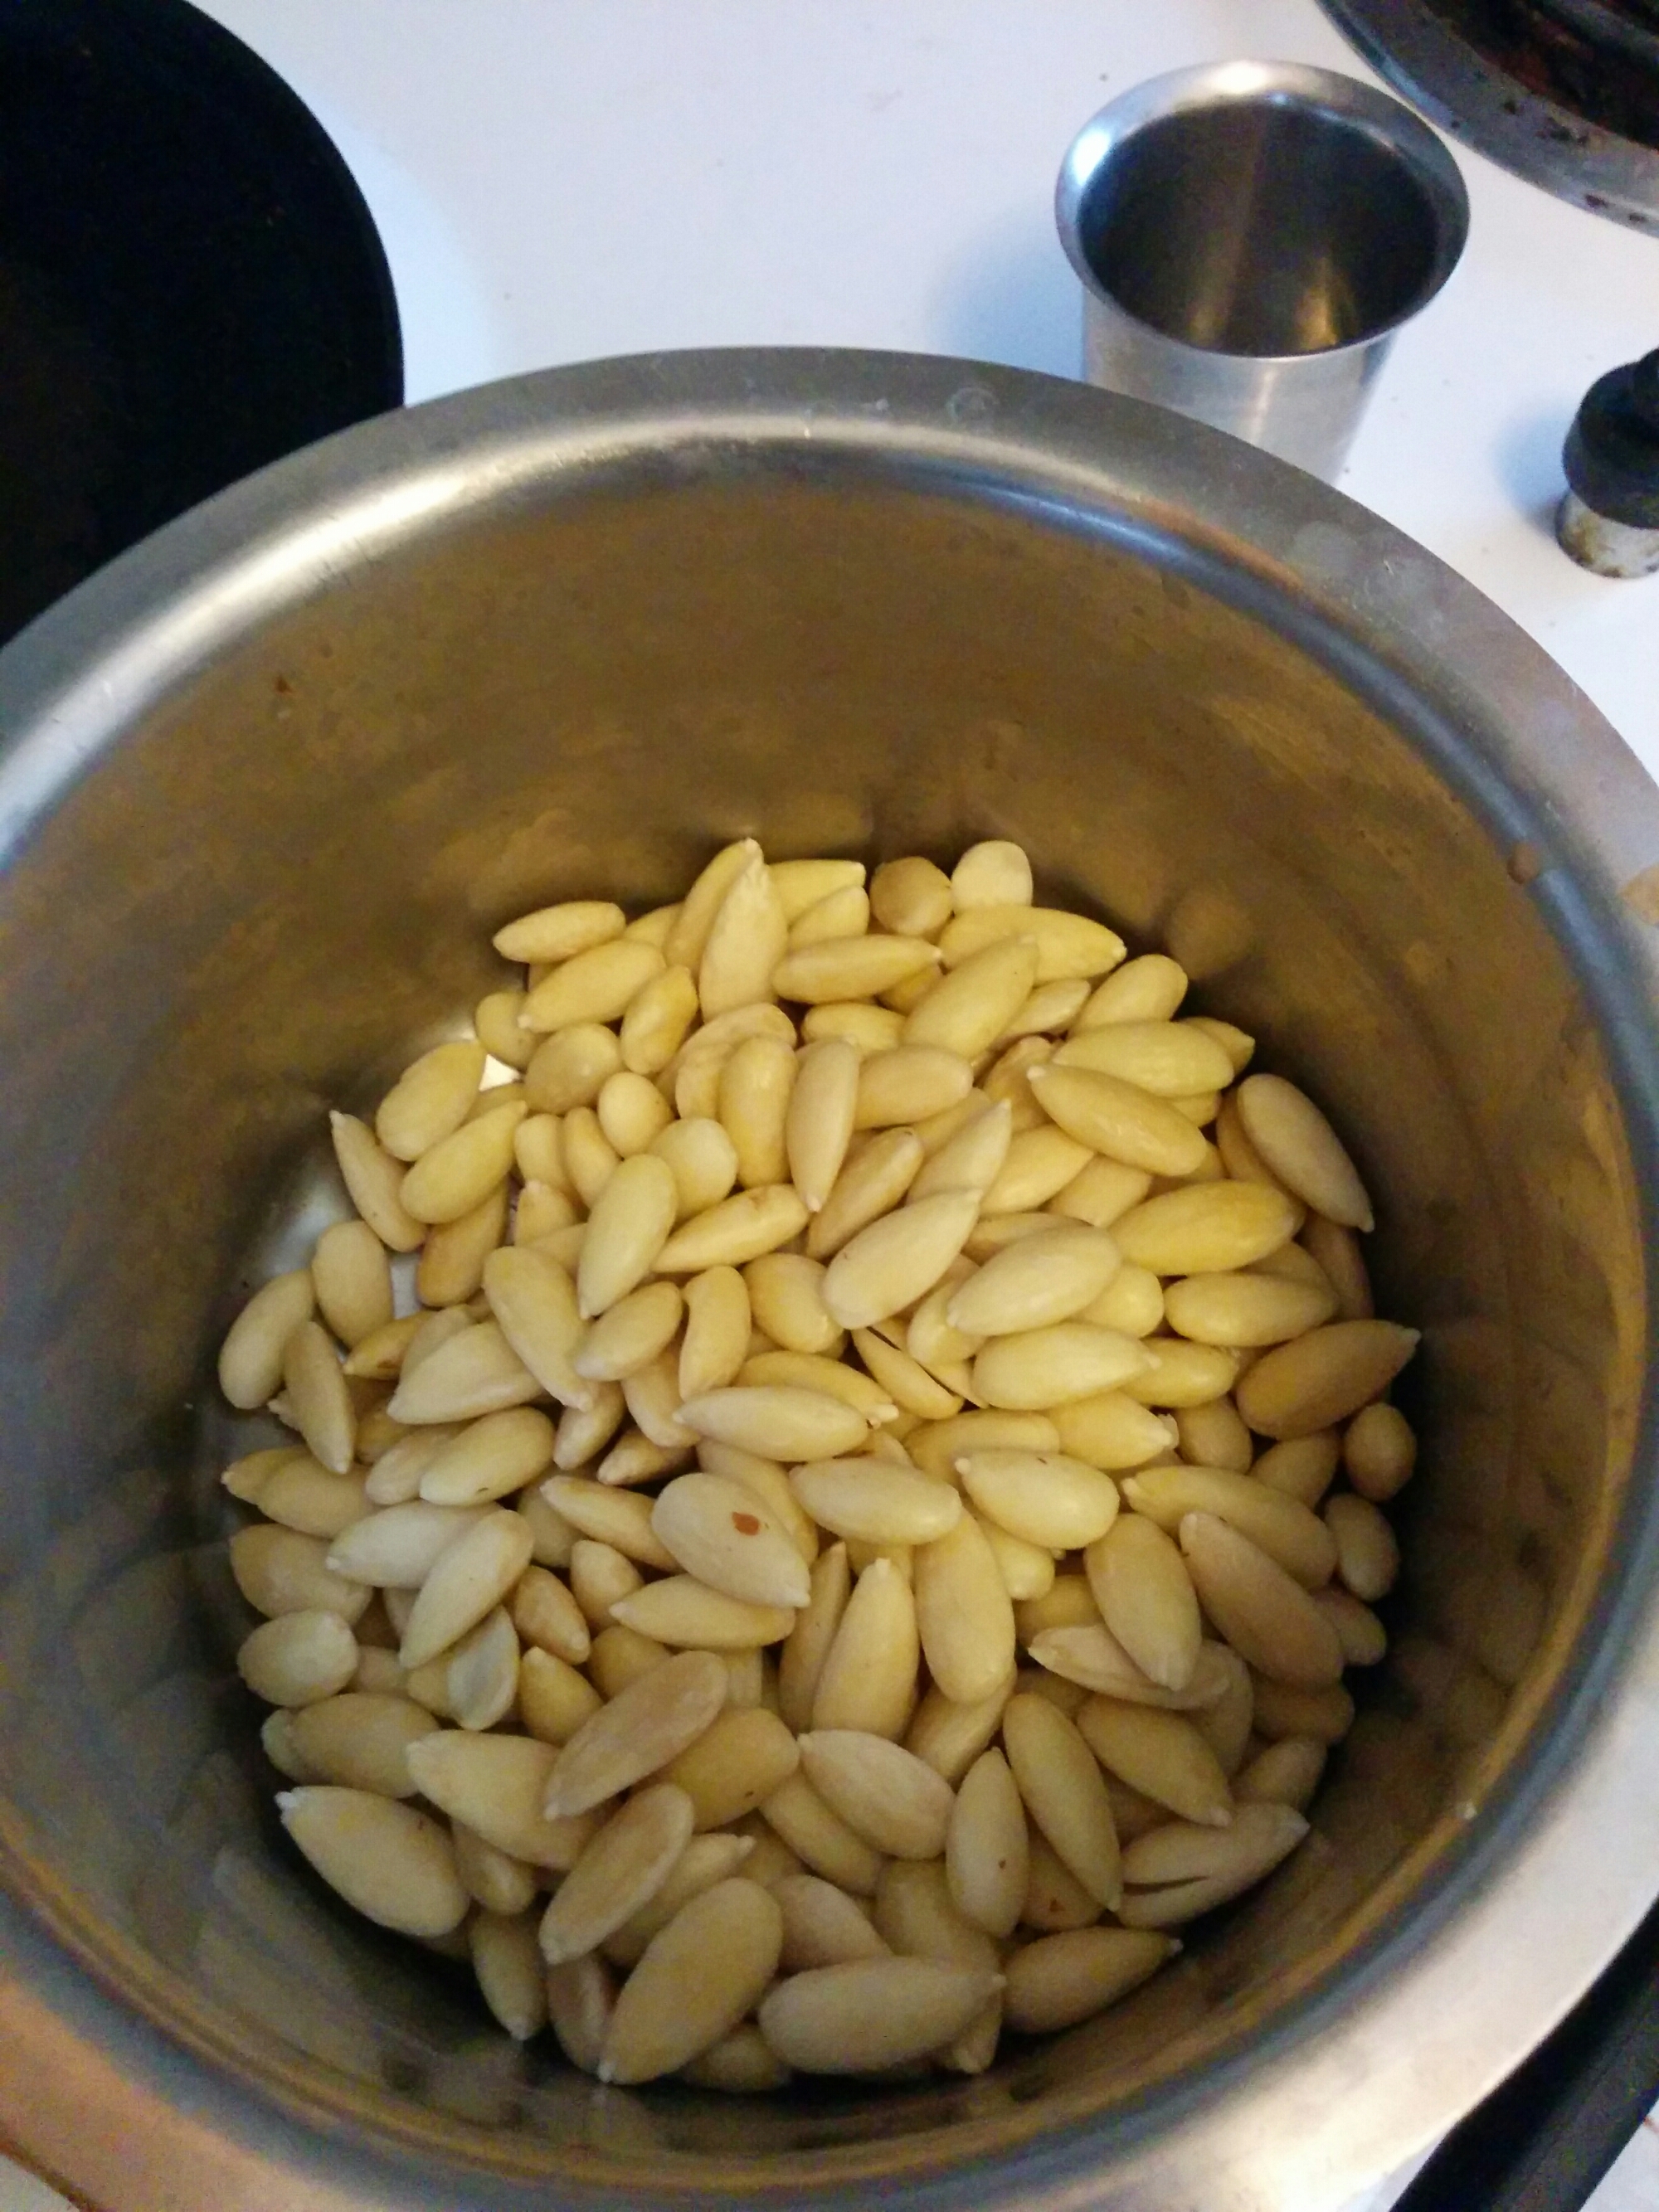 peeled almonds